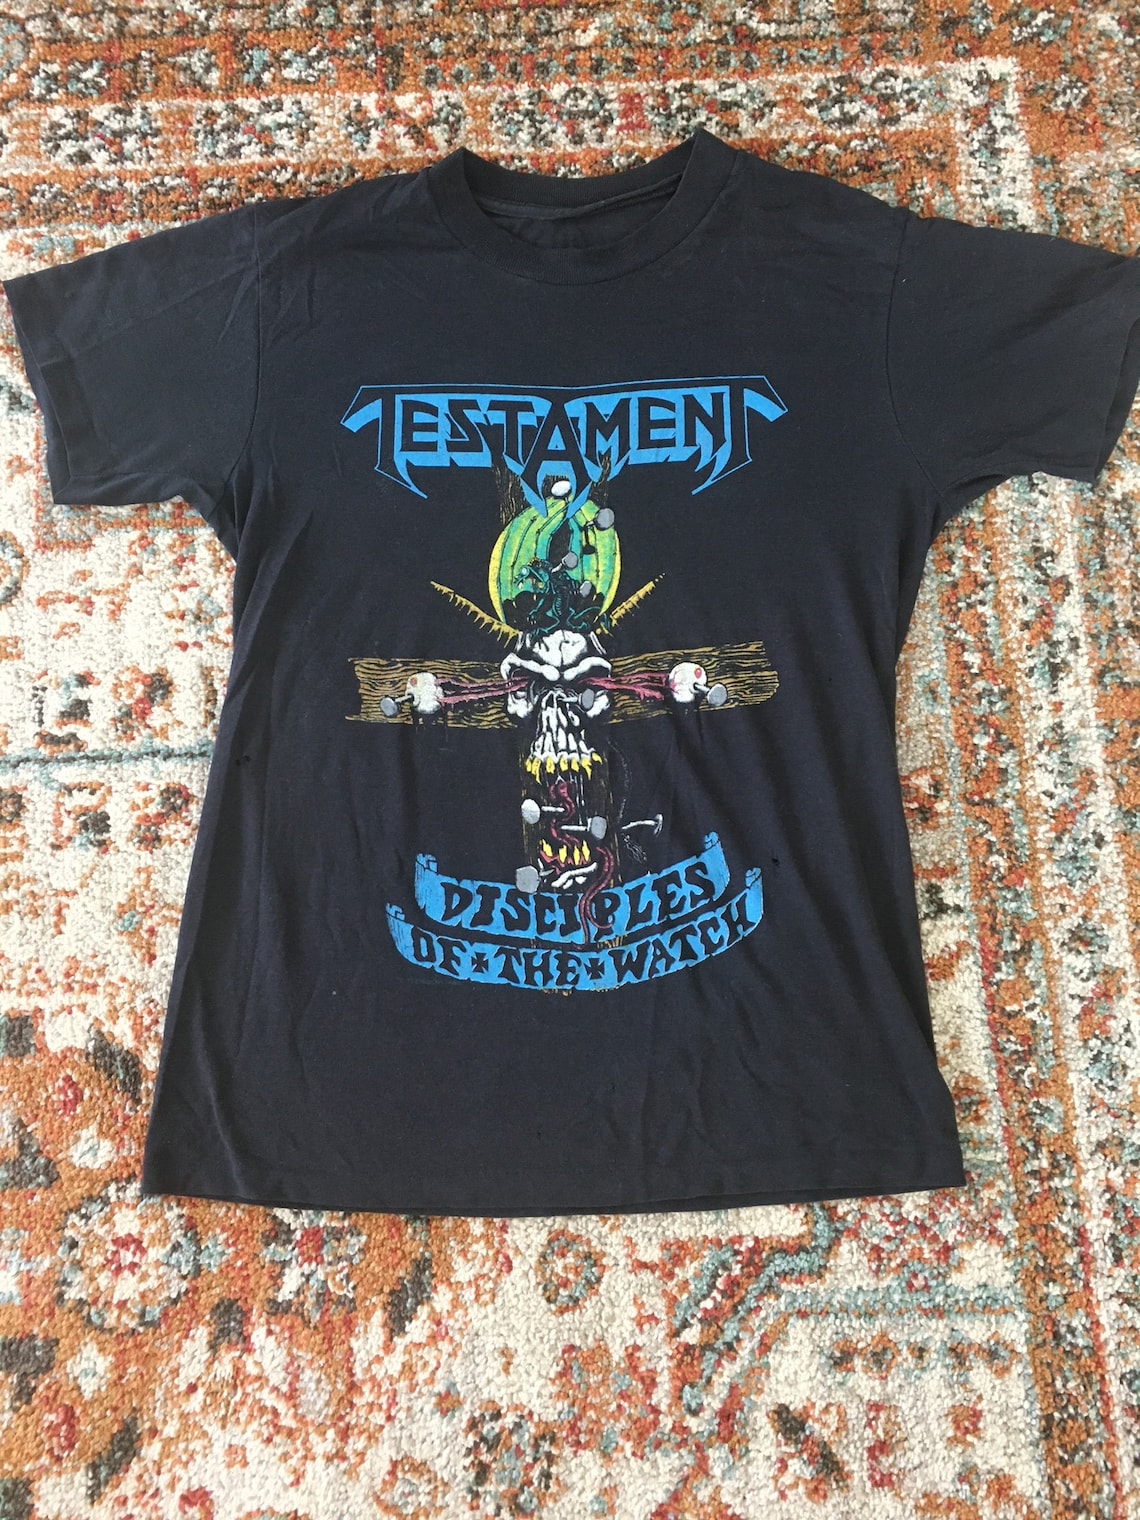 1989 TESTAMENT Practice What You Preach Tour vintage t-shirt | Etsy